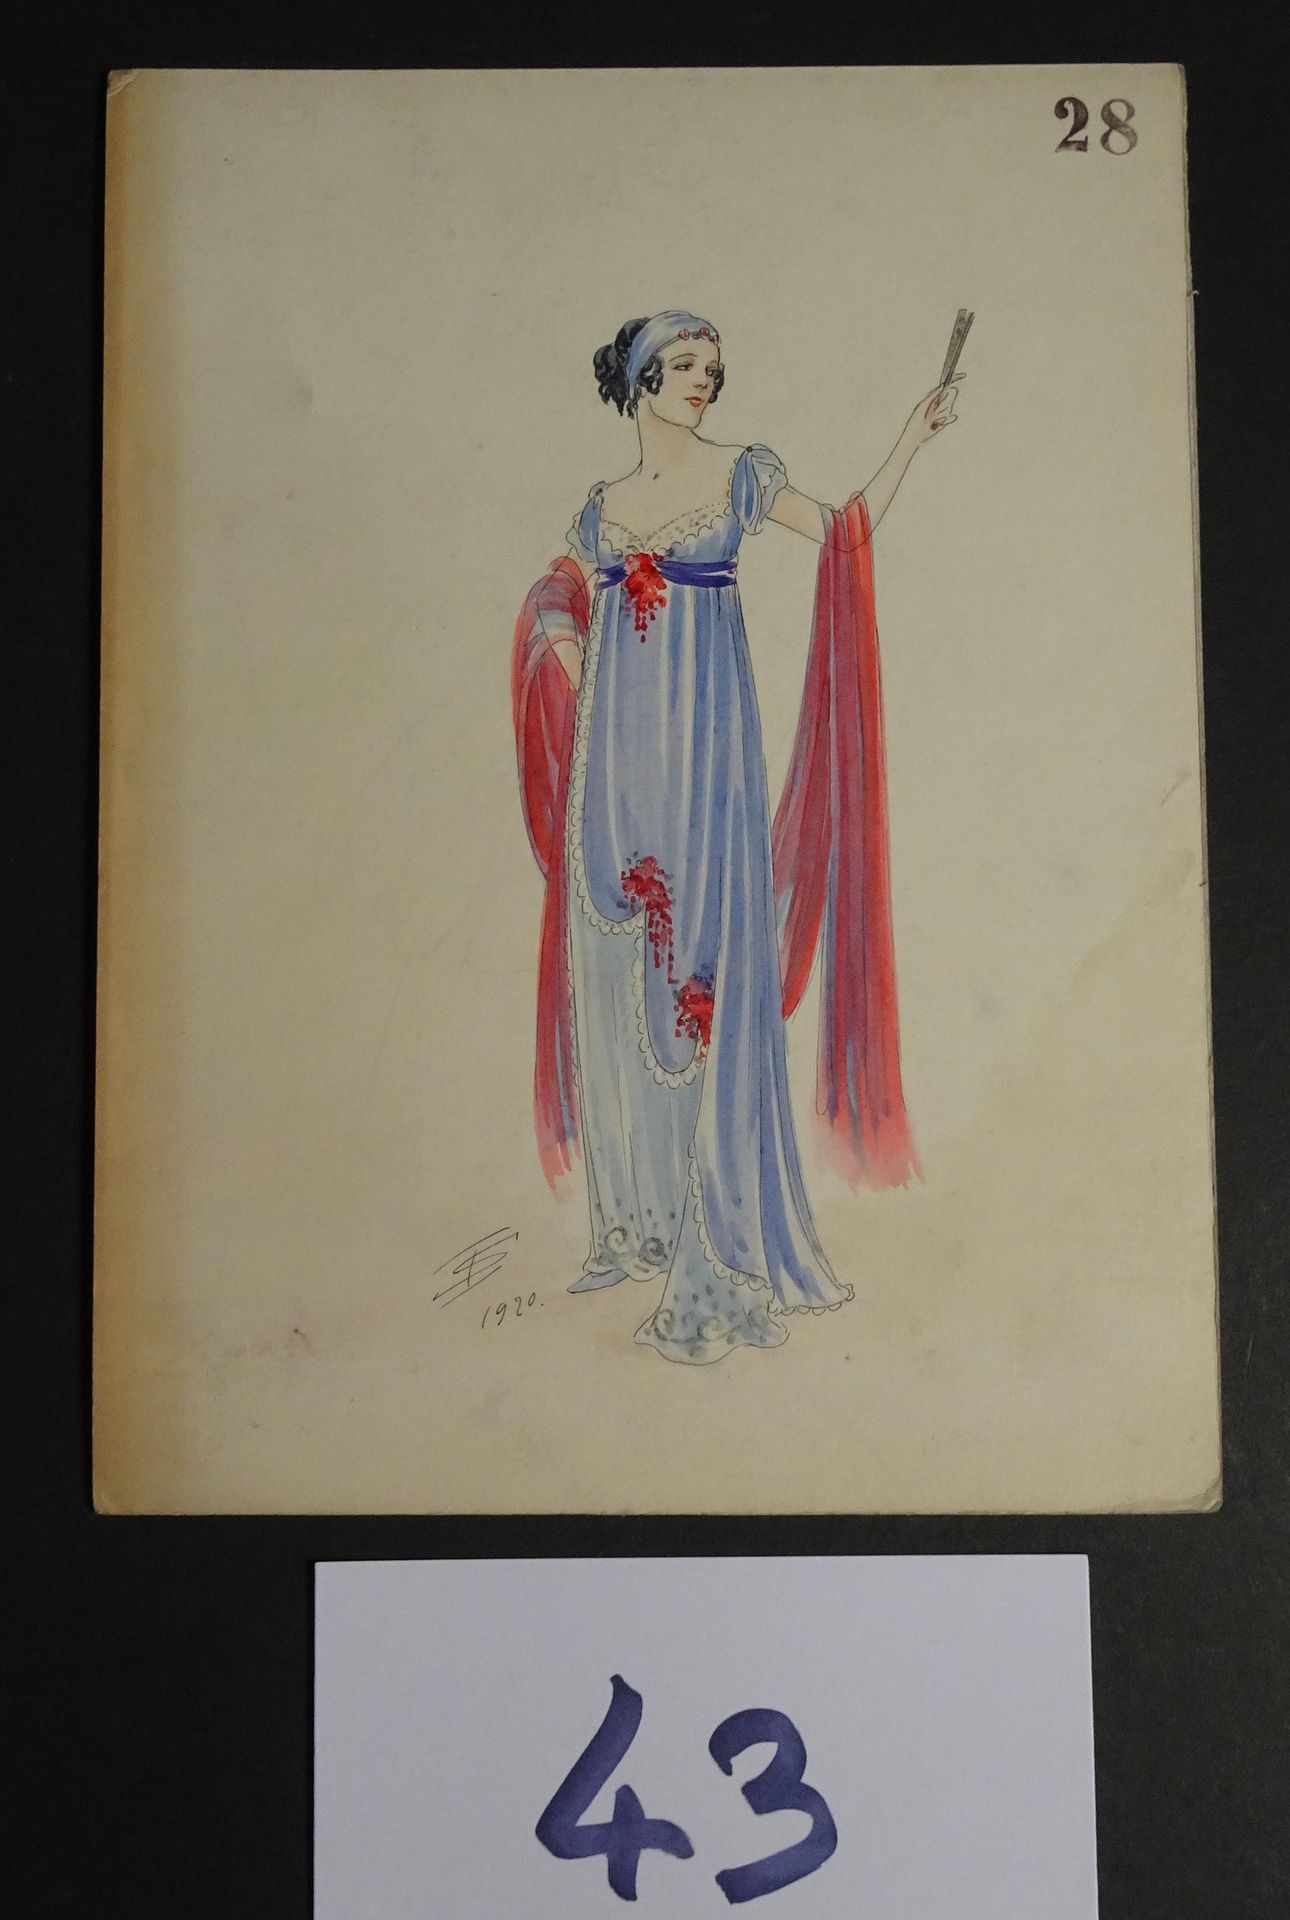 SOKOLOFF SOKOLOFF IGOR (20世纪初)

"拿着扇子的女人"。钢笔、墨水和水彩画。左下角有签名，日期为1920年。